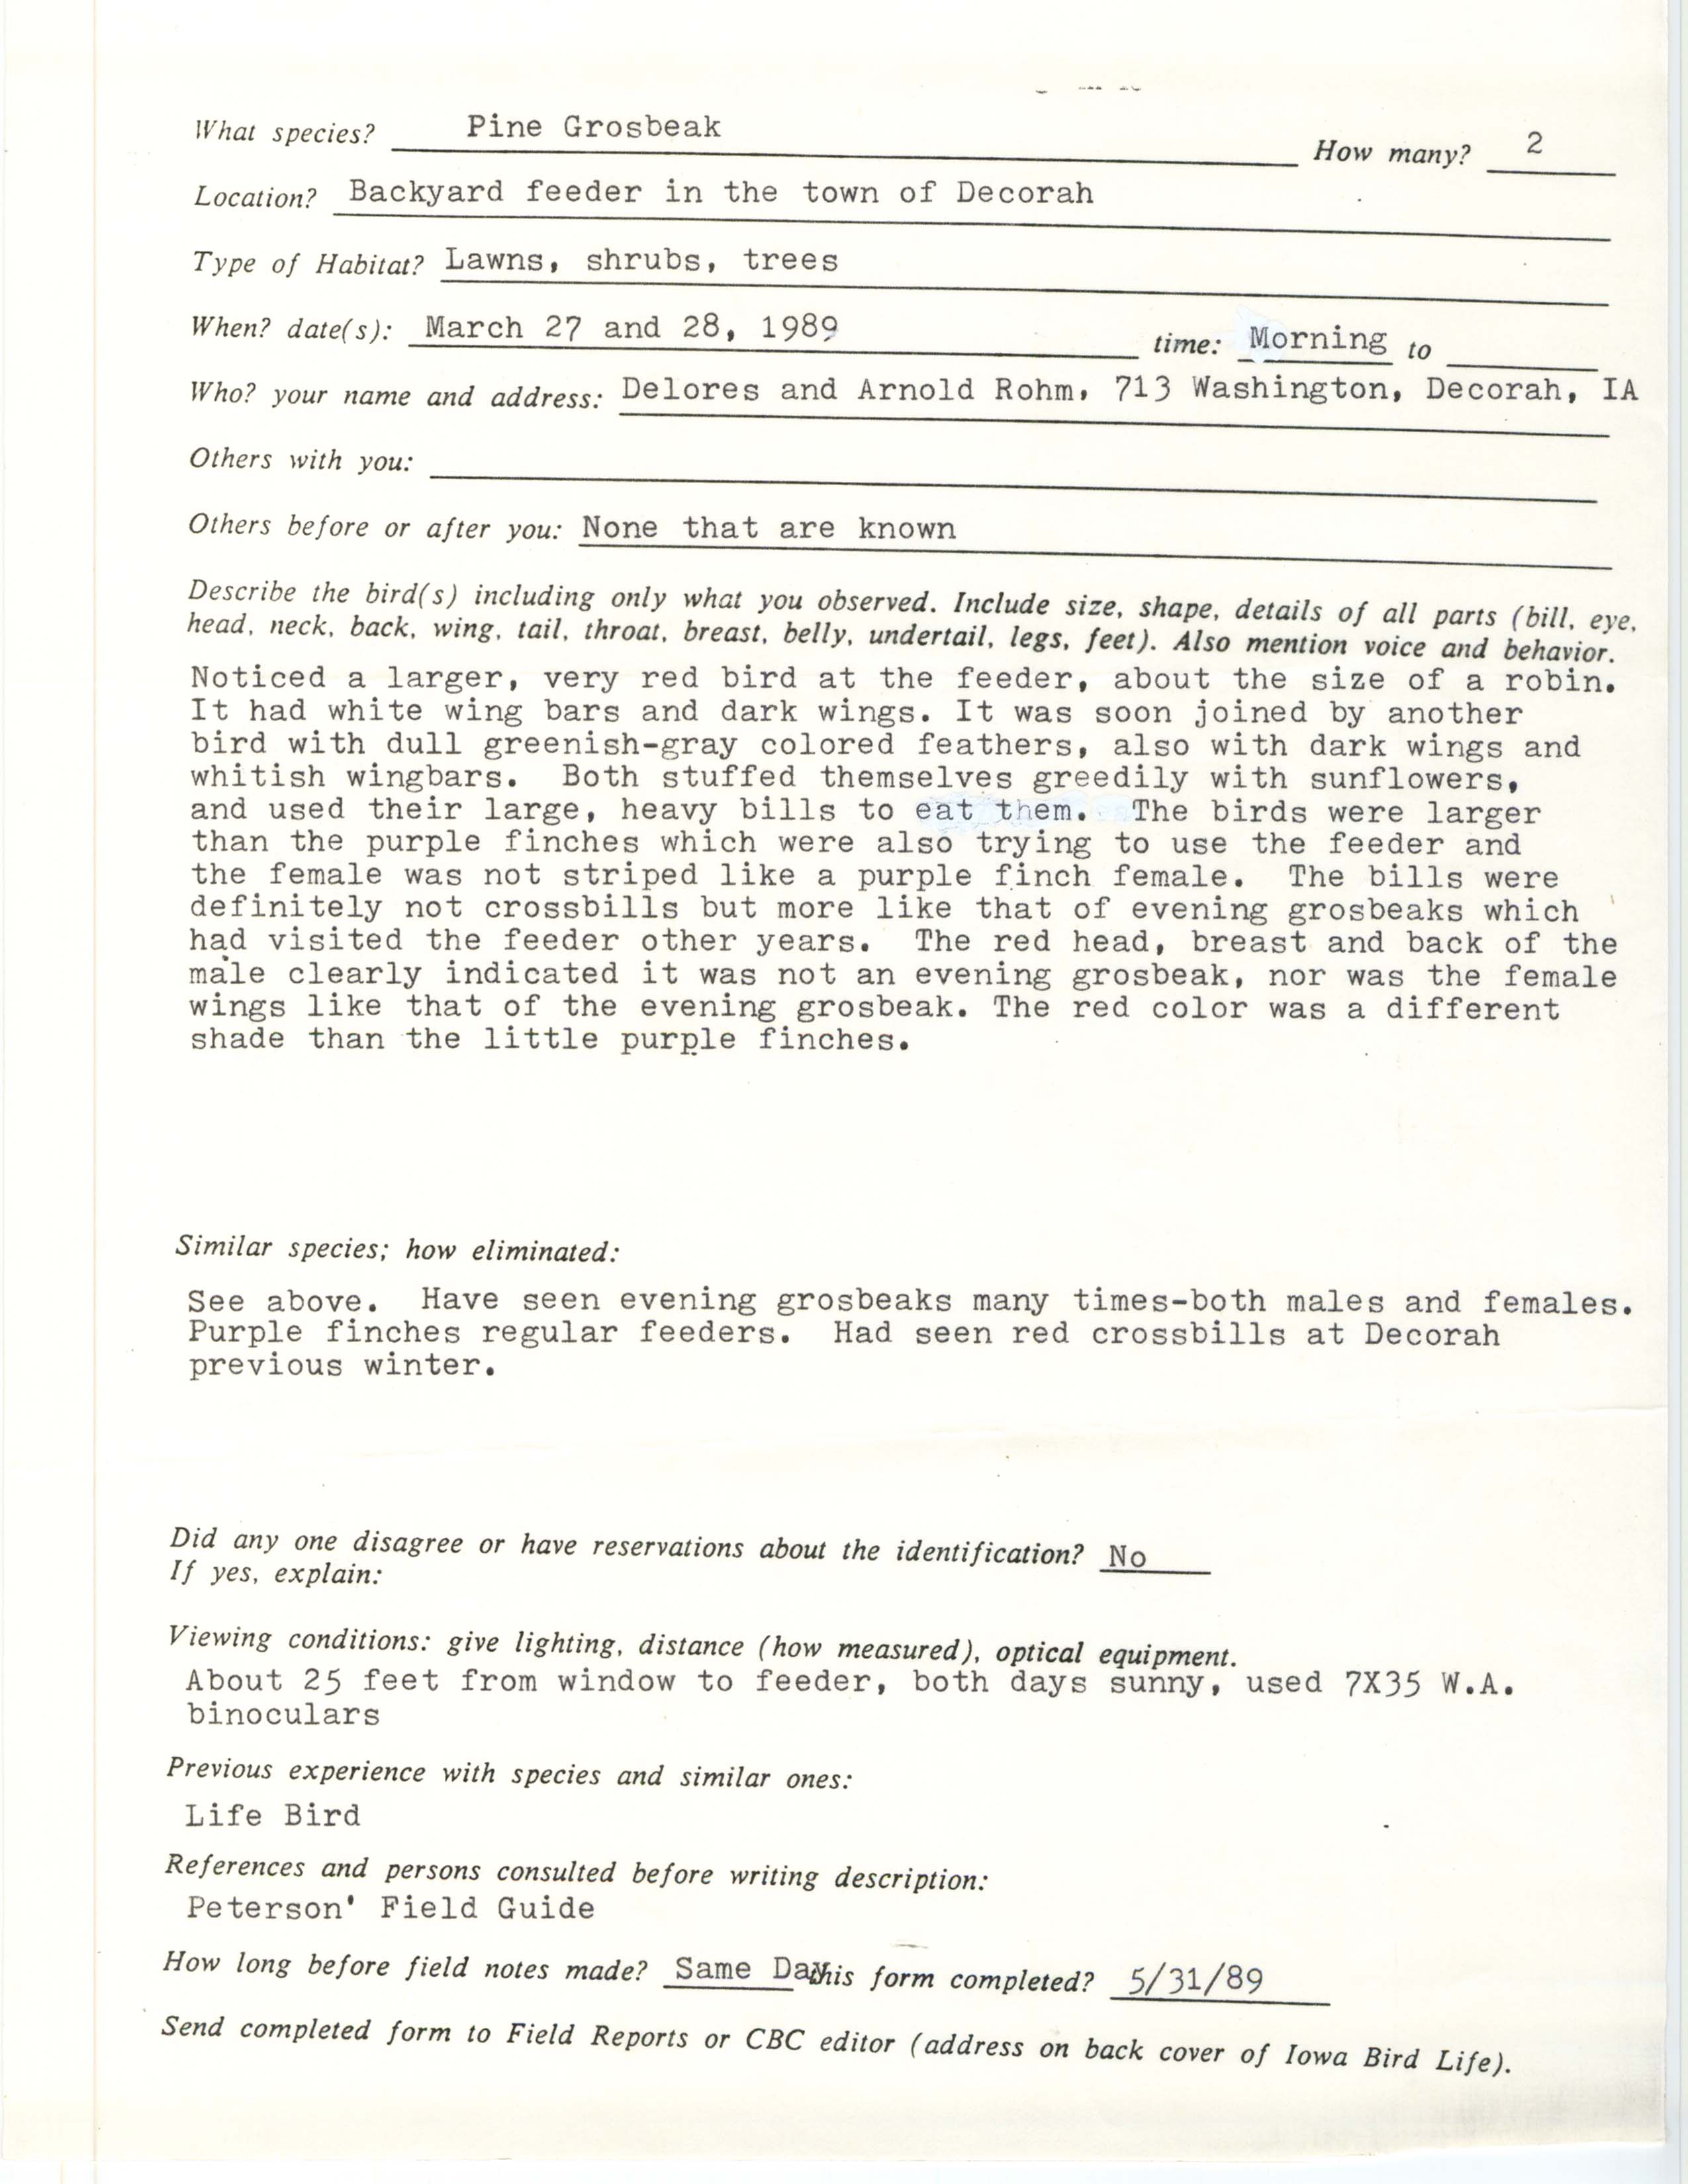 Rare bird documentation form for Pine Grosbeak at Decorah in 1989